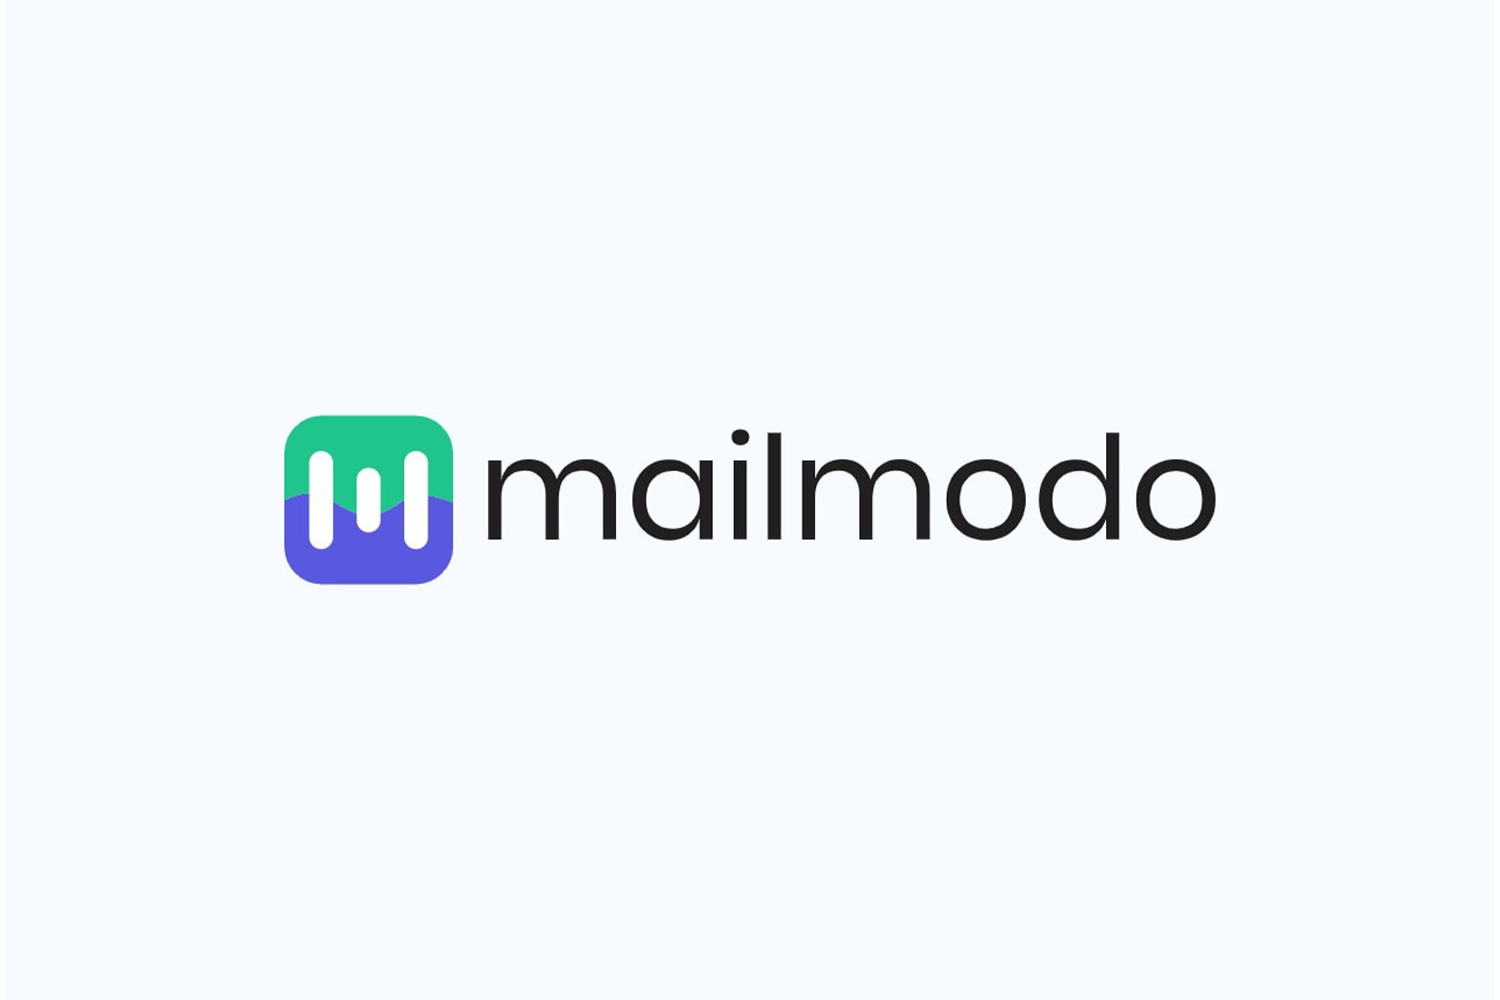 Mailmodo logo